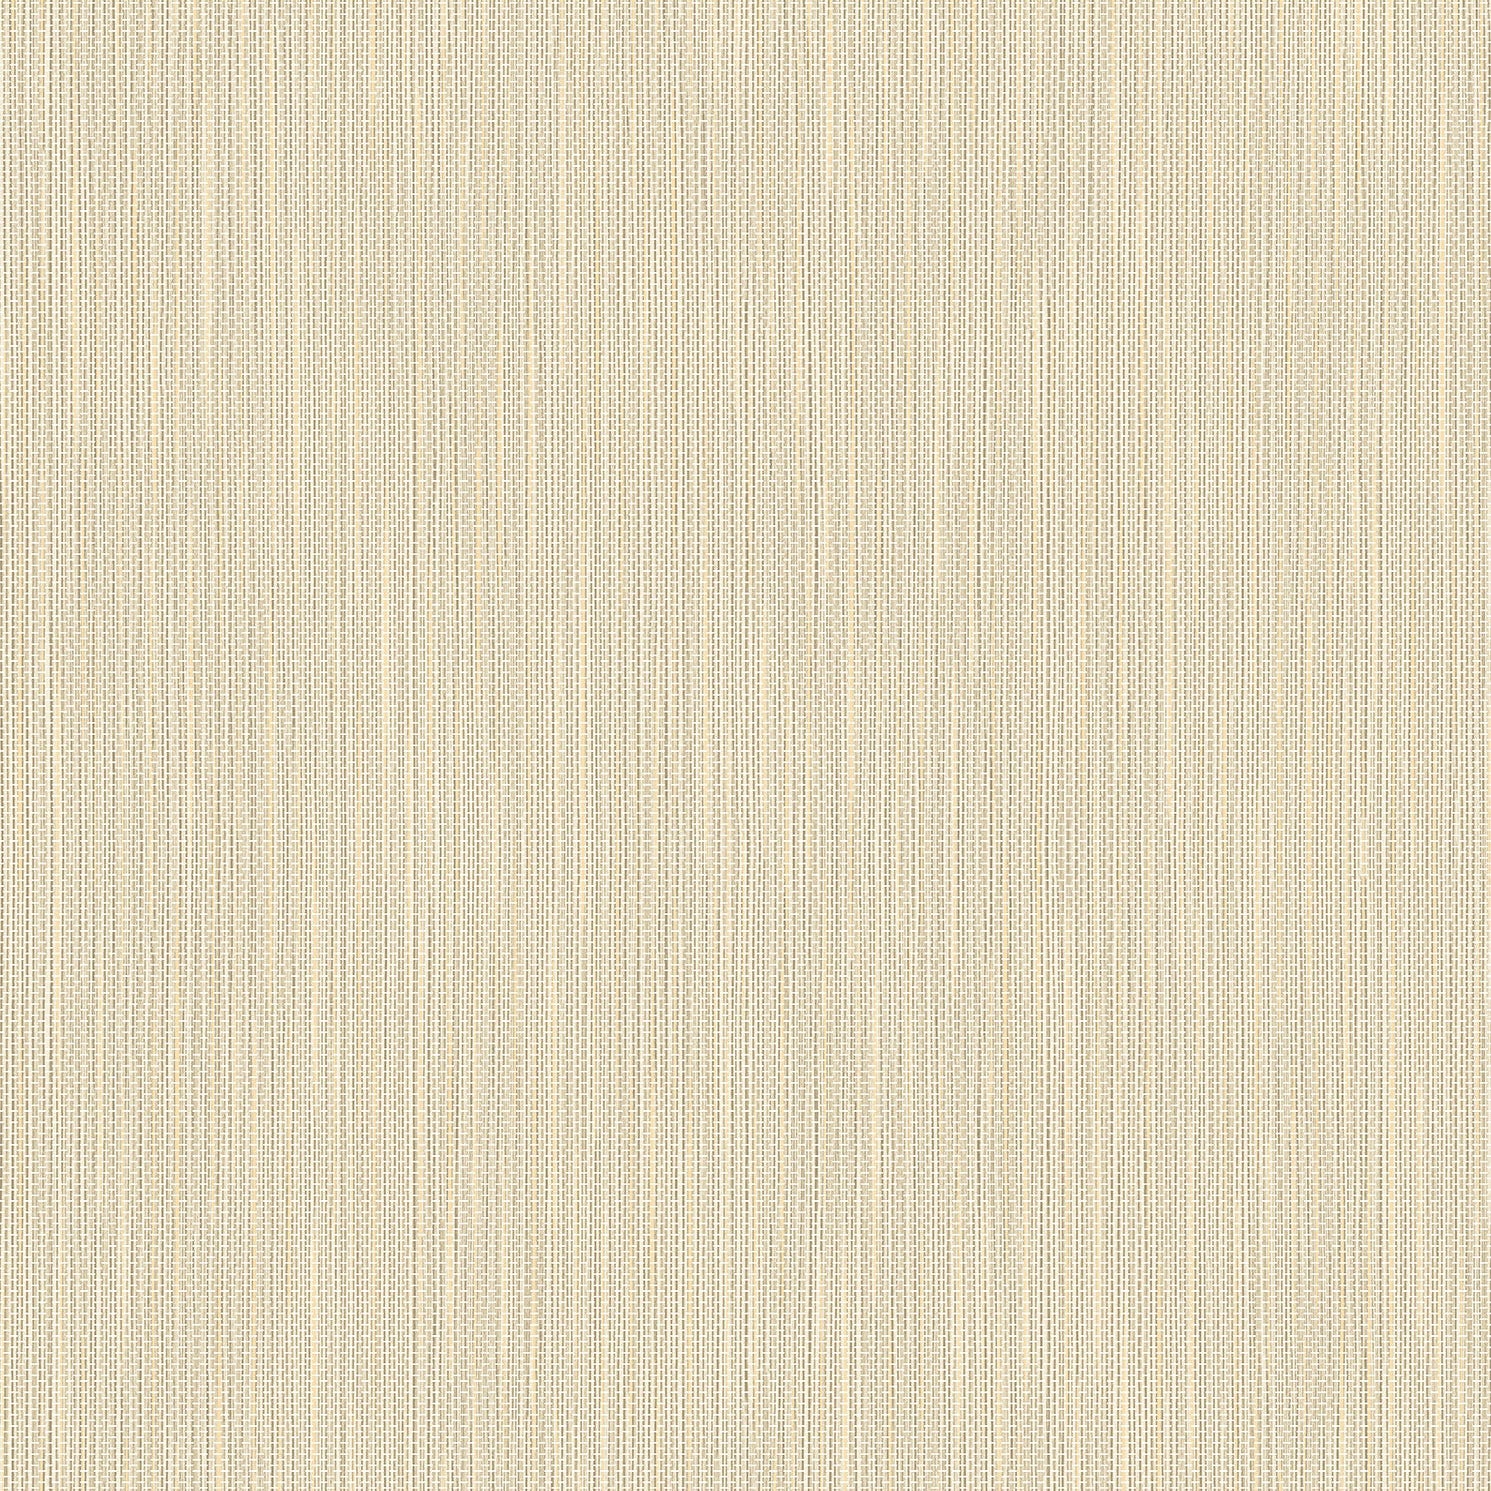 Find 2813-SY51081 Kitchen Neutrals Faux Grasscloth Wallpaper by Advantage